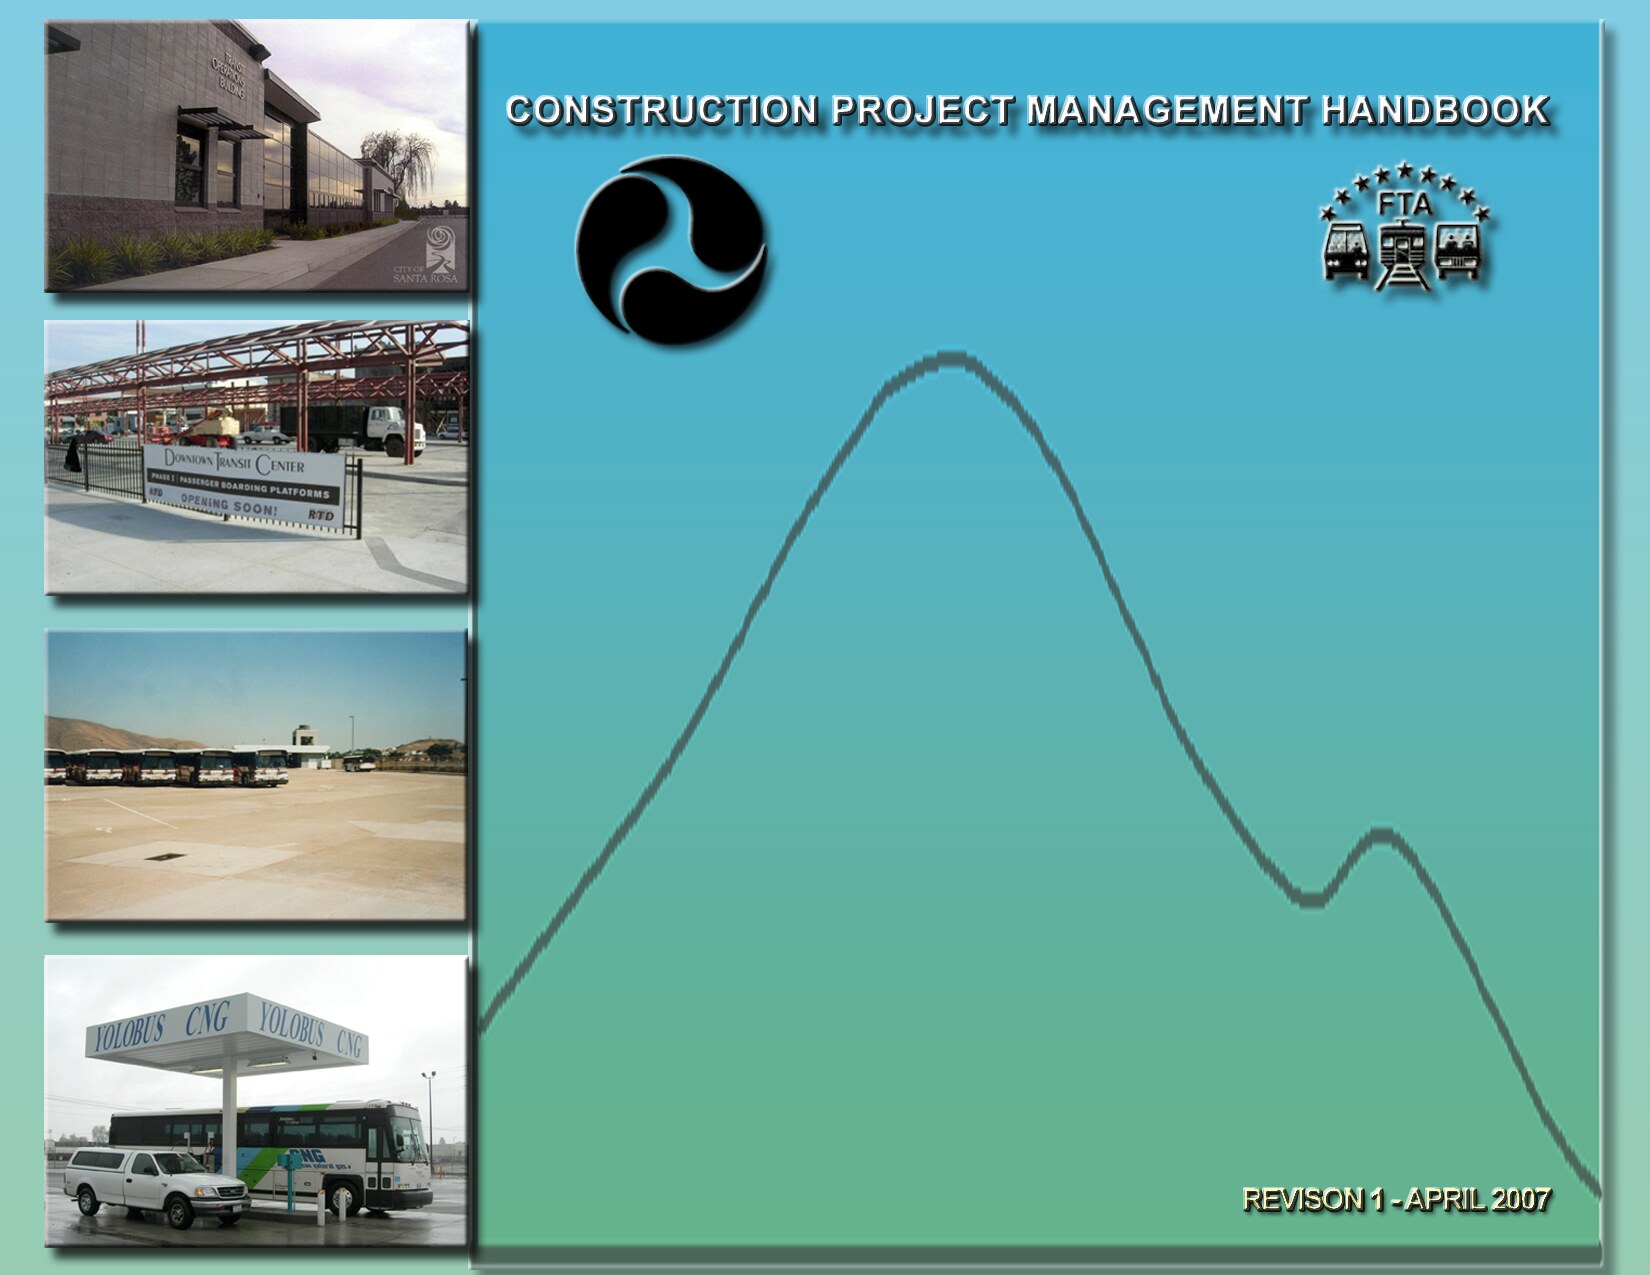 Construction Project Management Handbook - Revision 1 April 2007